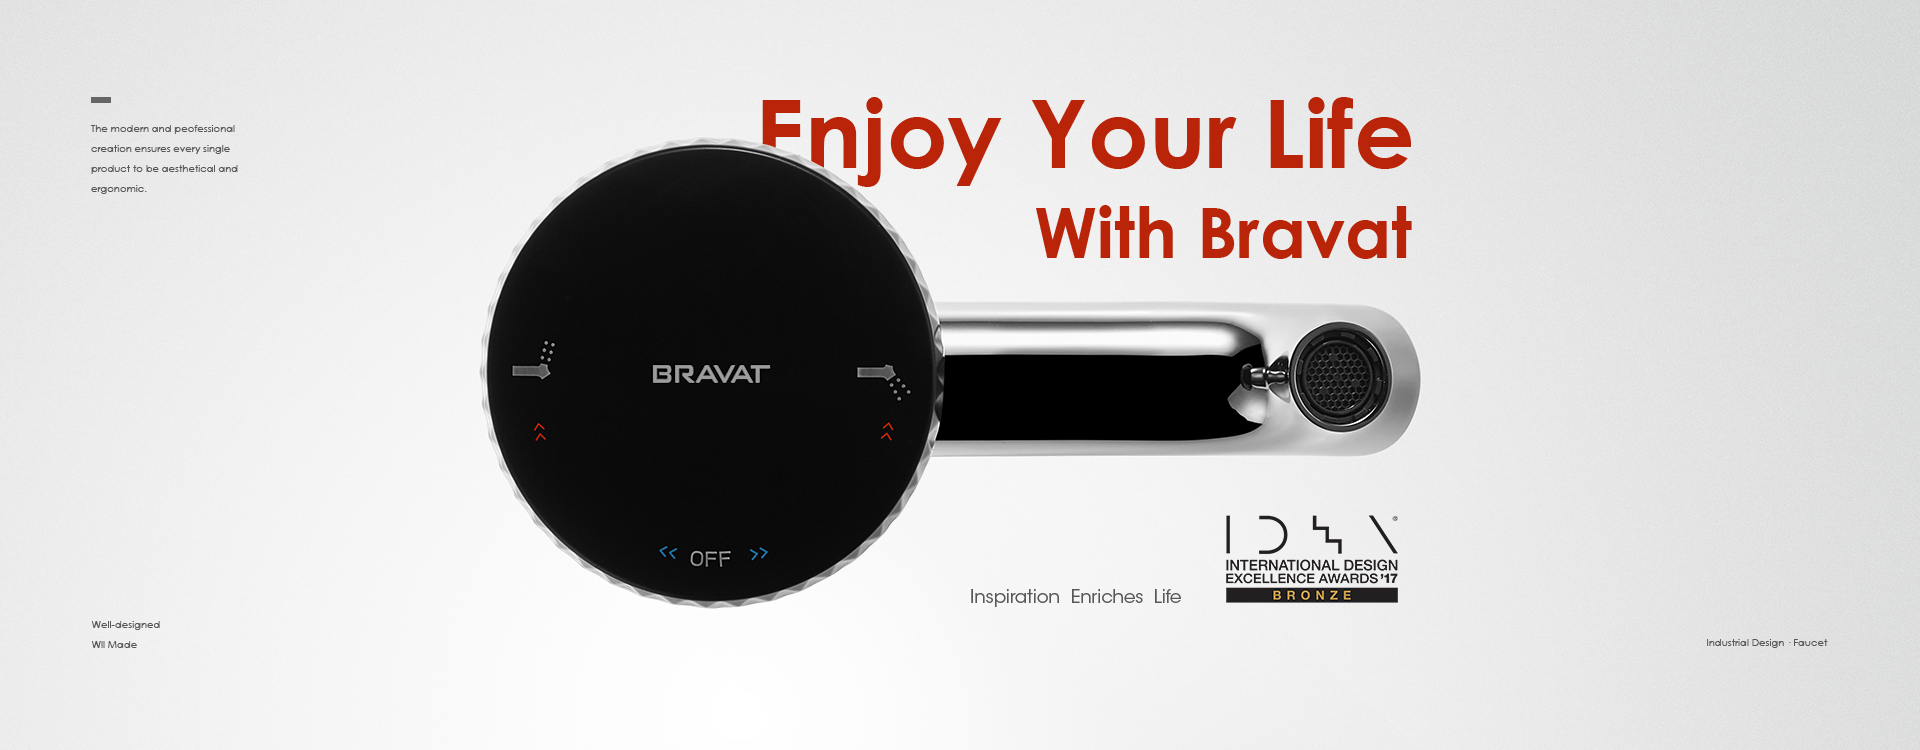 Enjoy Your Life With Bravat